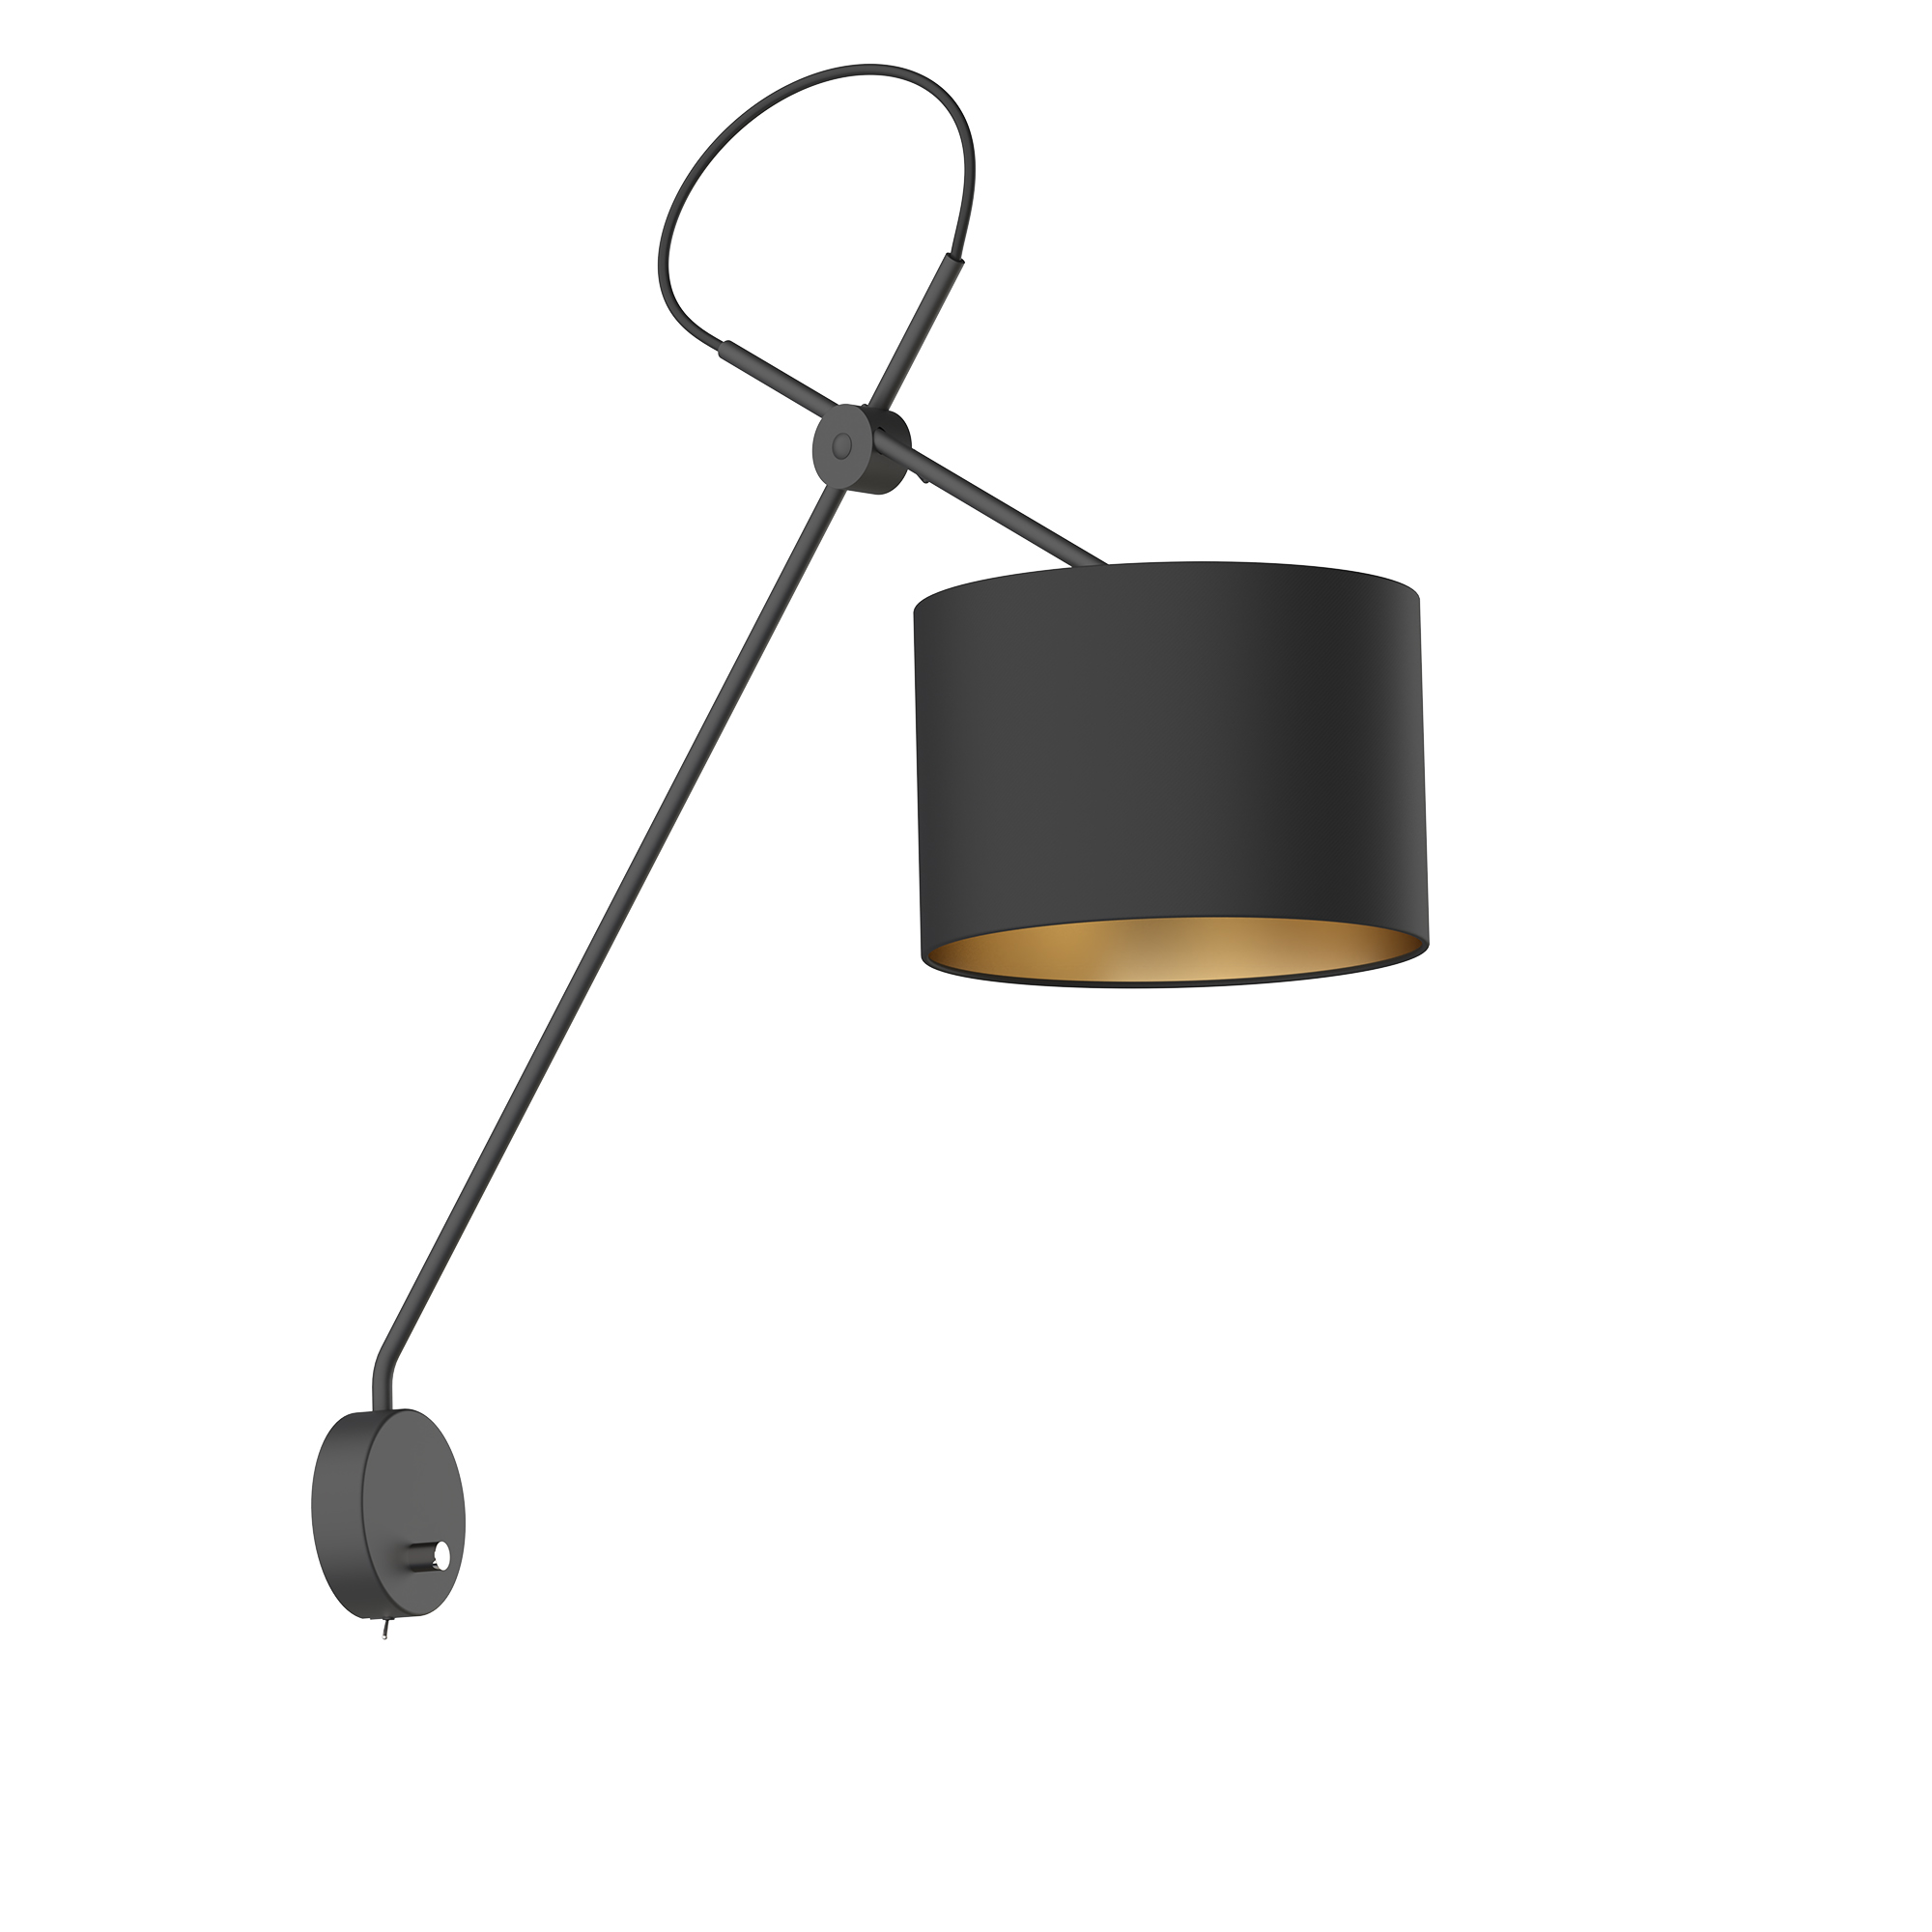 Lampa cienna stylowa czarno-zoty E27 kinkiet na ramieniu materia+stal VIPER I Nowodvorski 6513